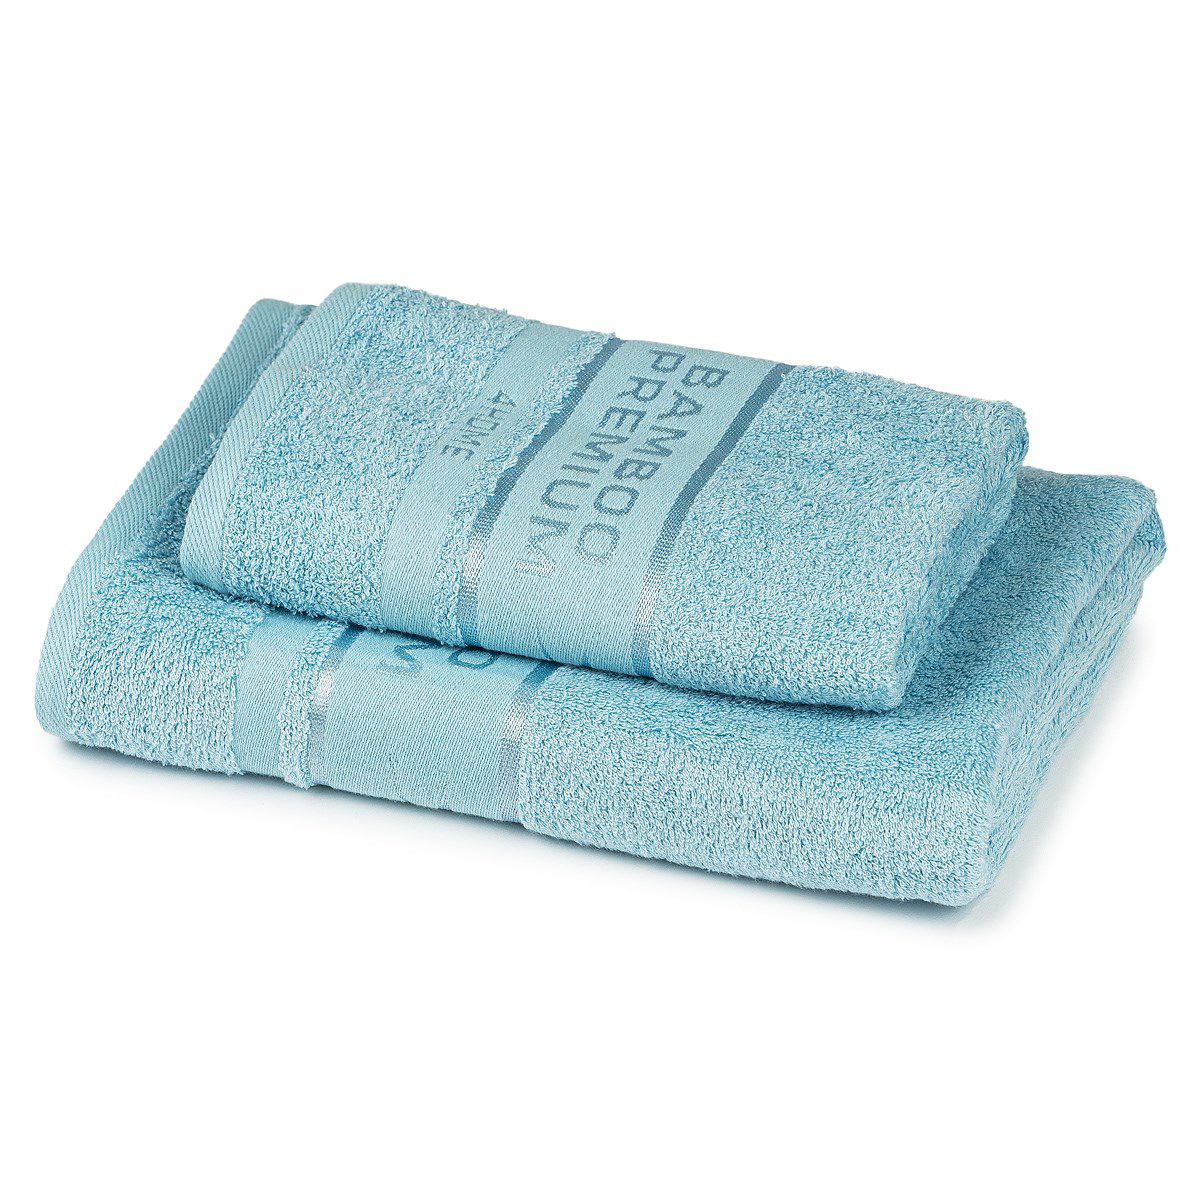 4Home Sada Bamboo Premium osuška a ručník světle modrá, 70 x 140 cm, 50 x 100 cm - 4home.cz